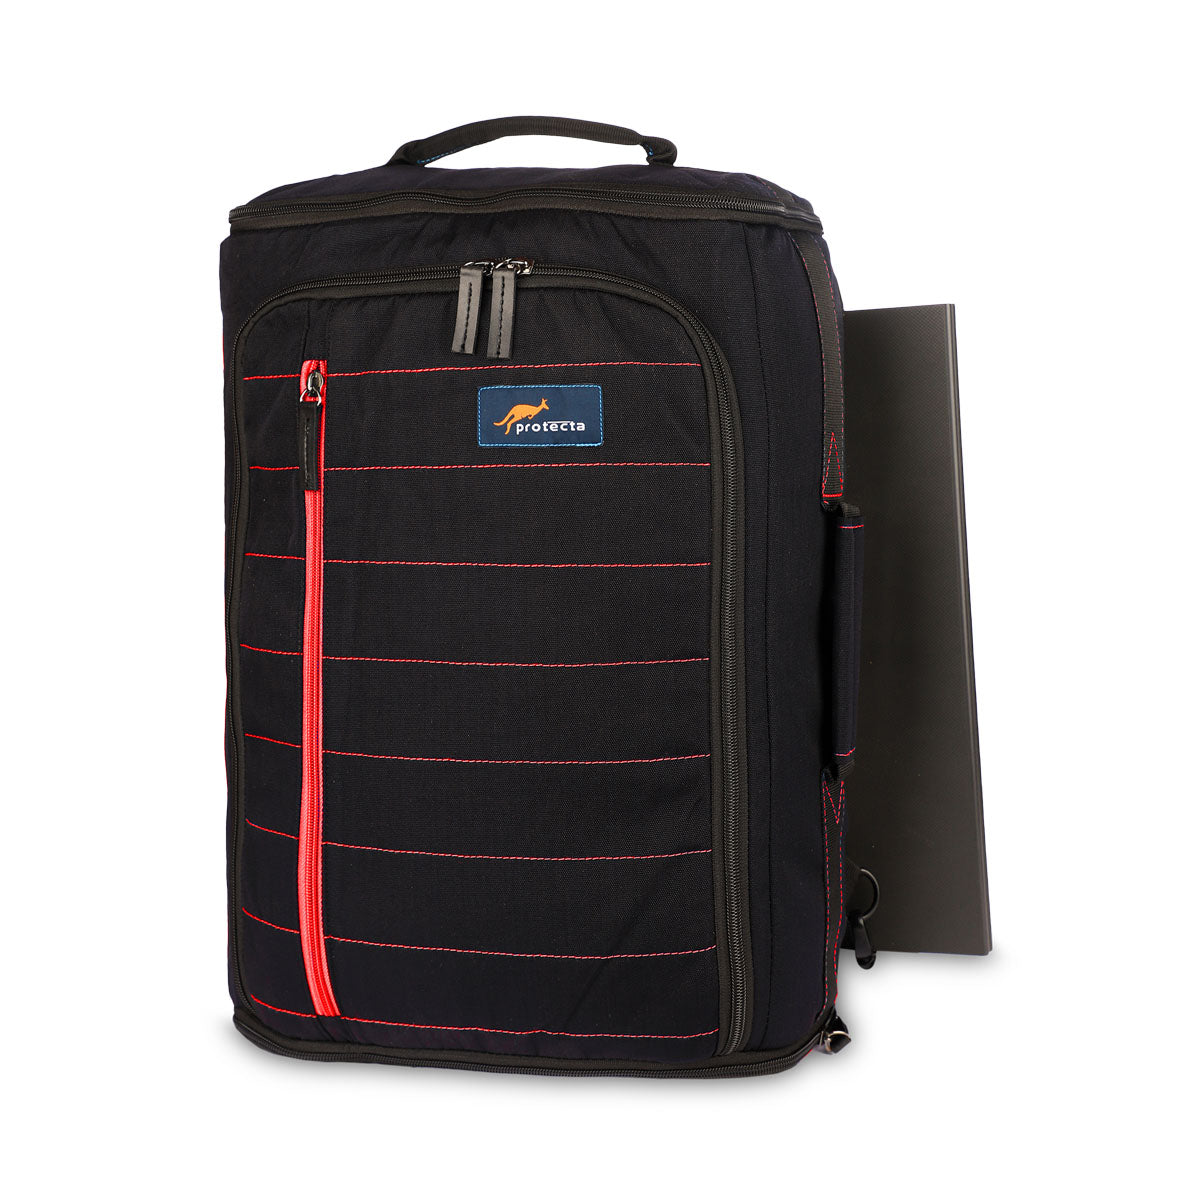 Black-Red | Protecta Memento Convertible Laptop Backpack-6